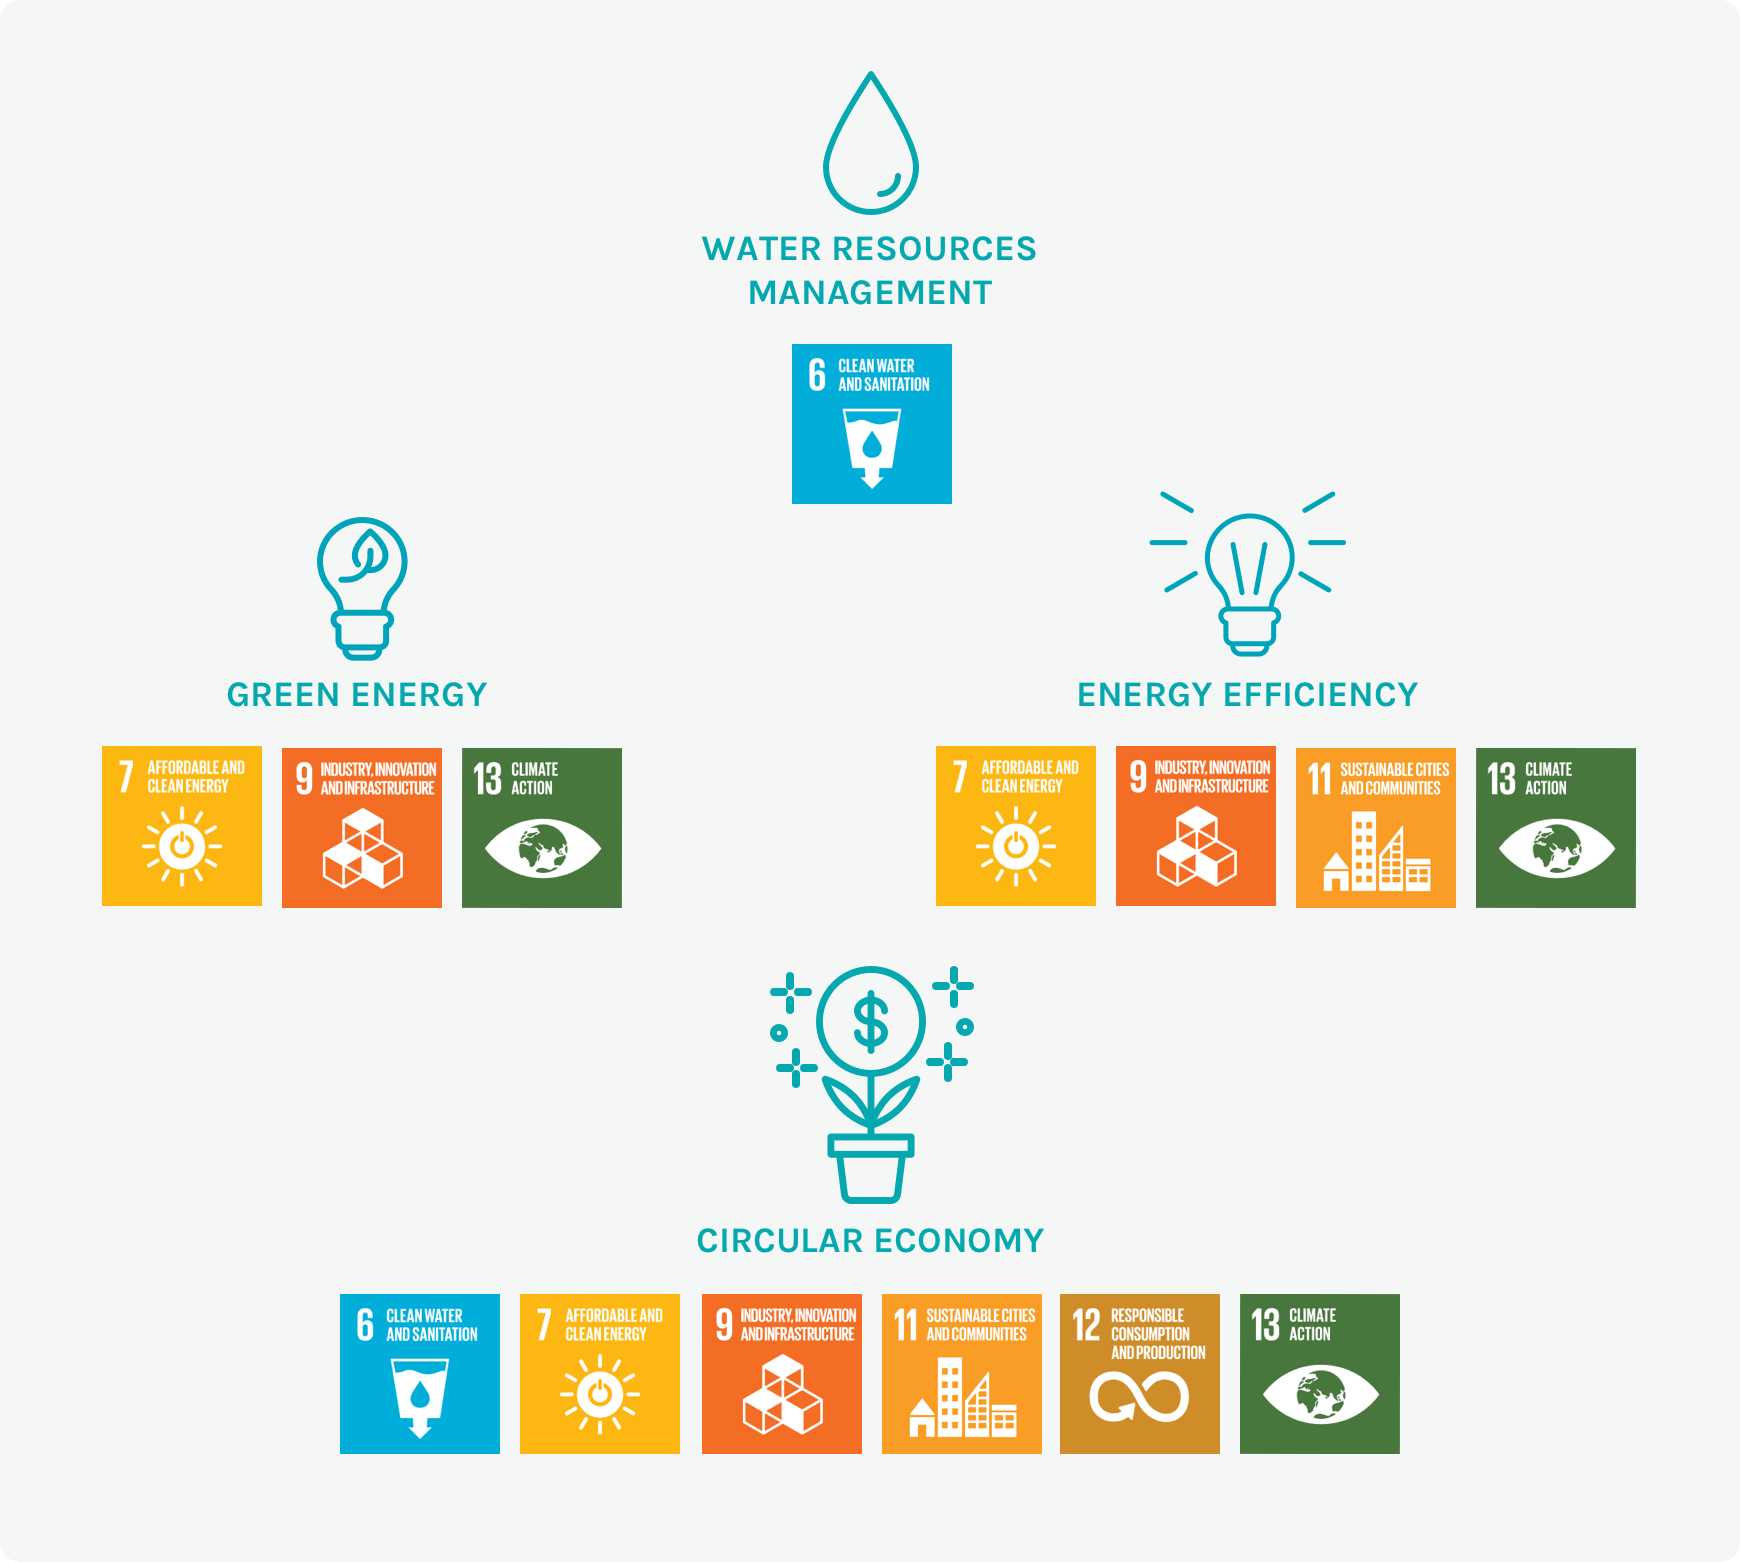 Sustainable development goals (SGDs)